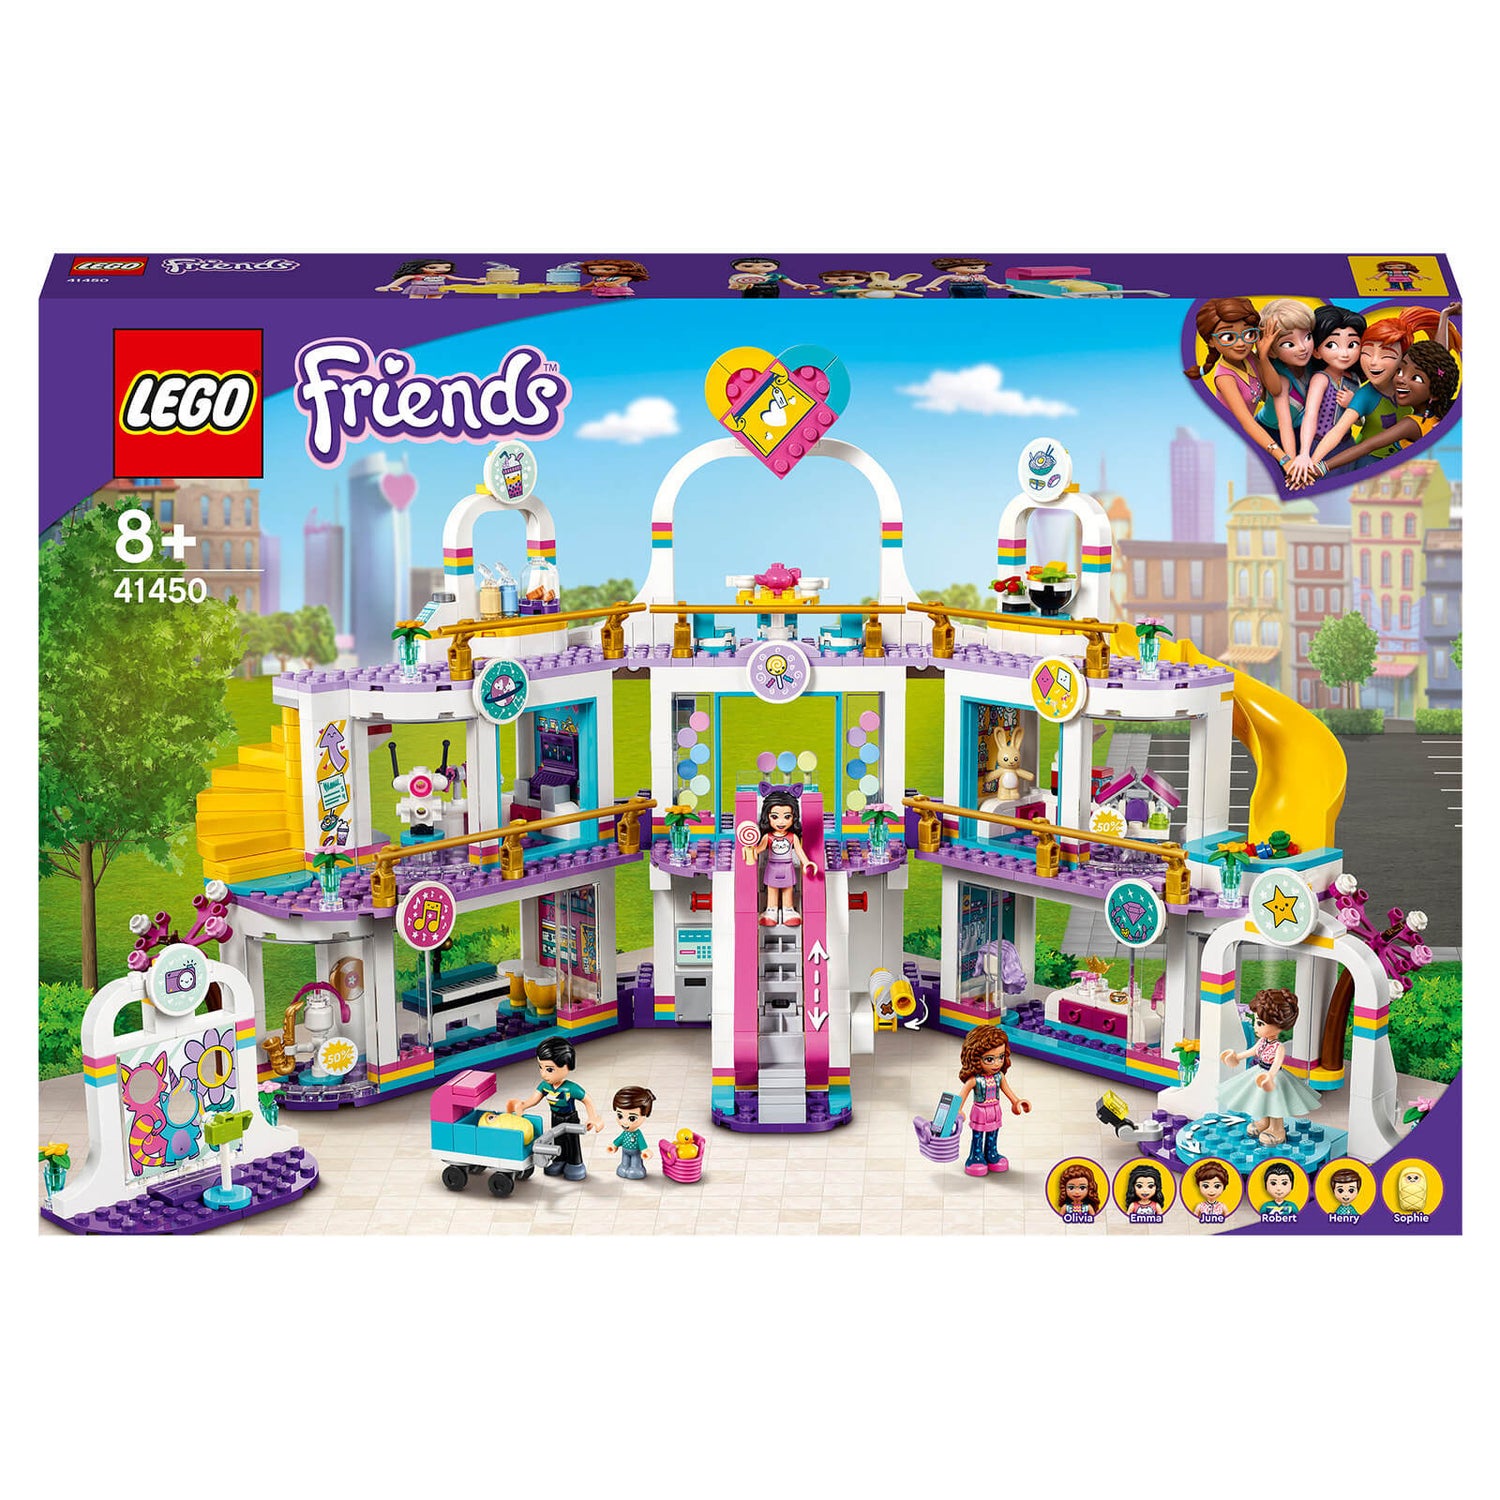 LEGO Friends: Heartlake City Shopping Mall Building Set (41450)